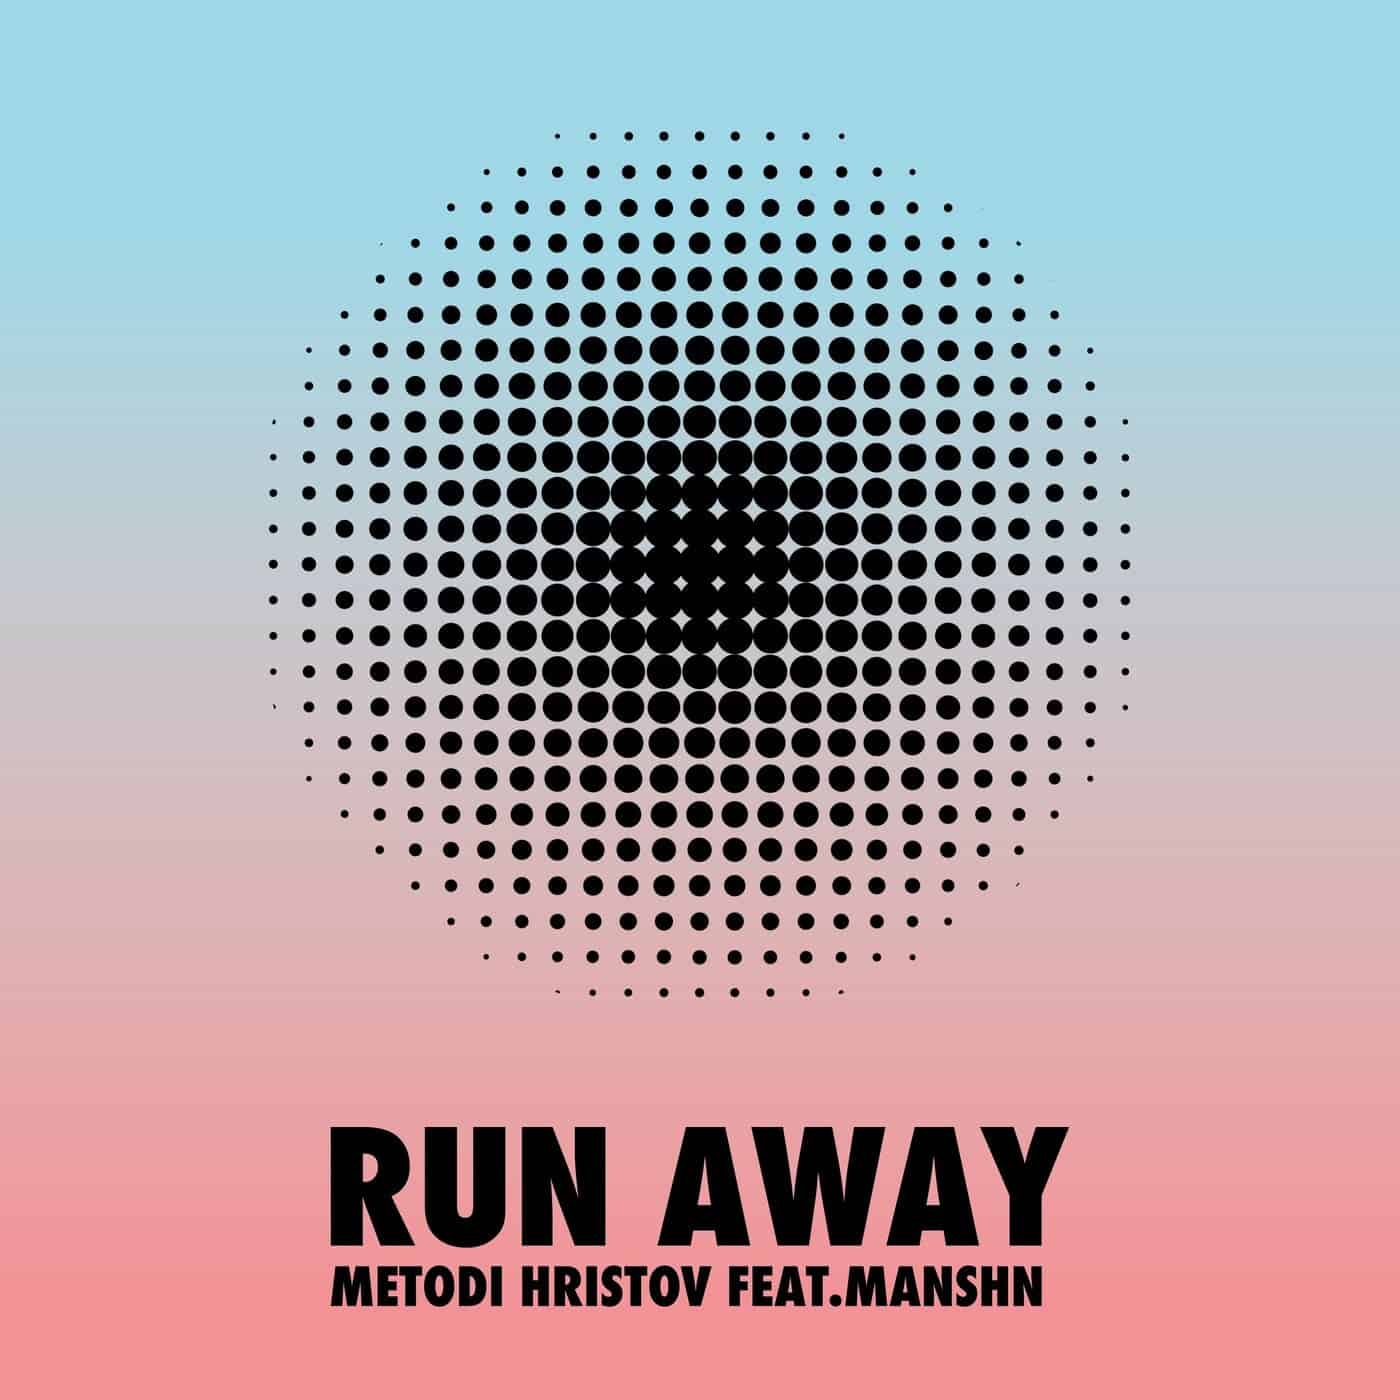 image cover: Metodi Hristov, MANSHN - Run Away on Systematic Recordings